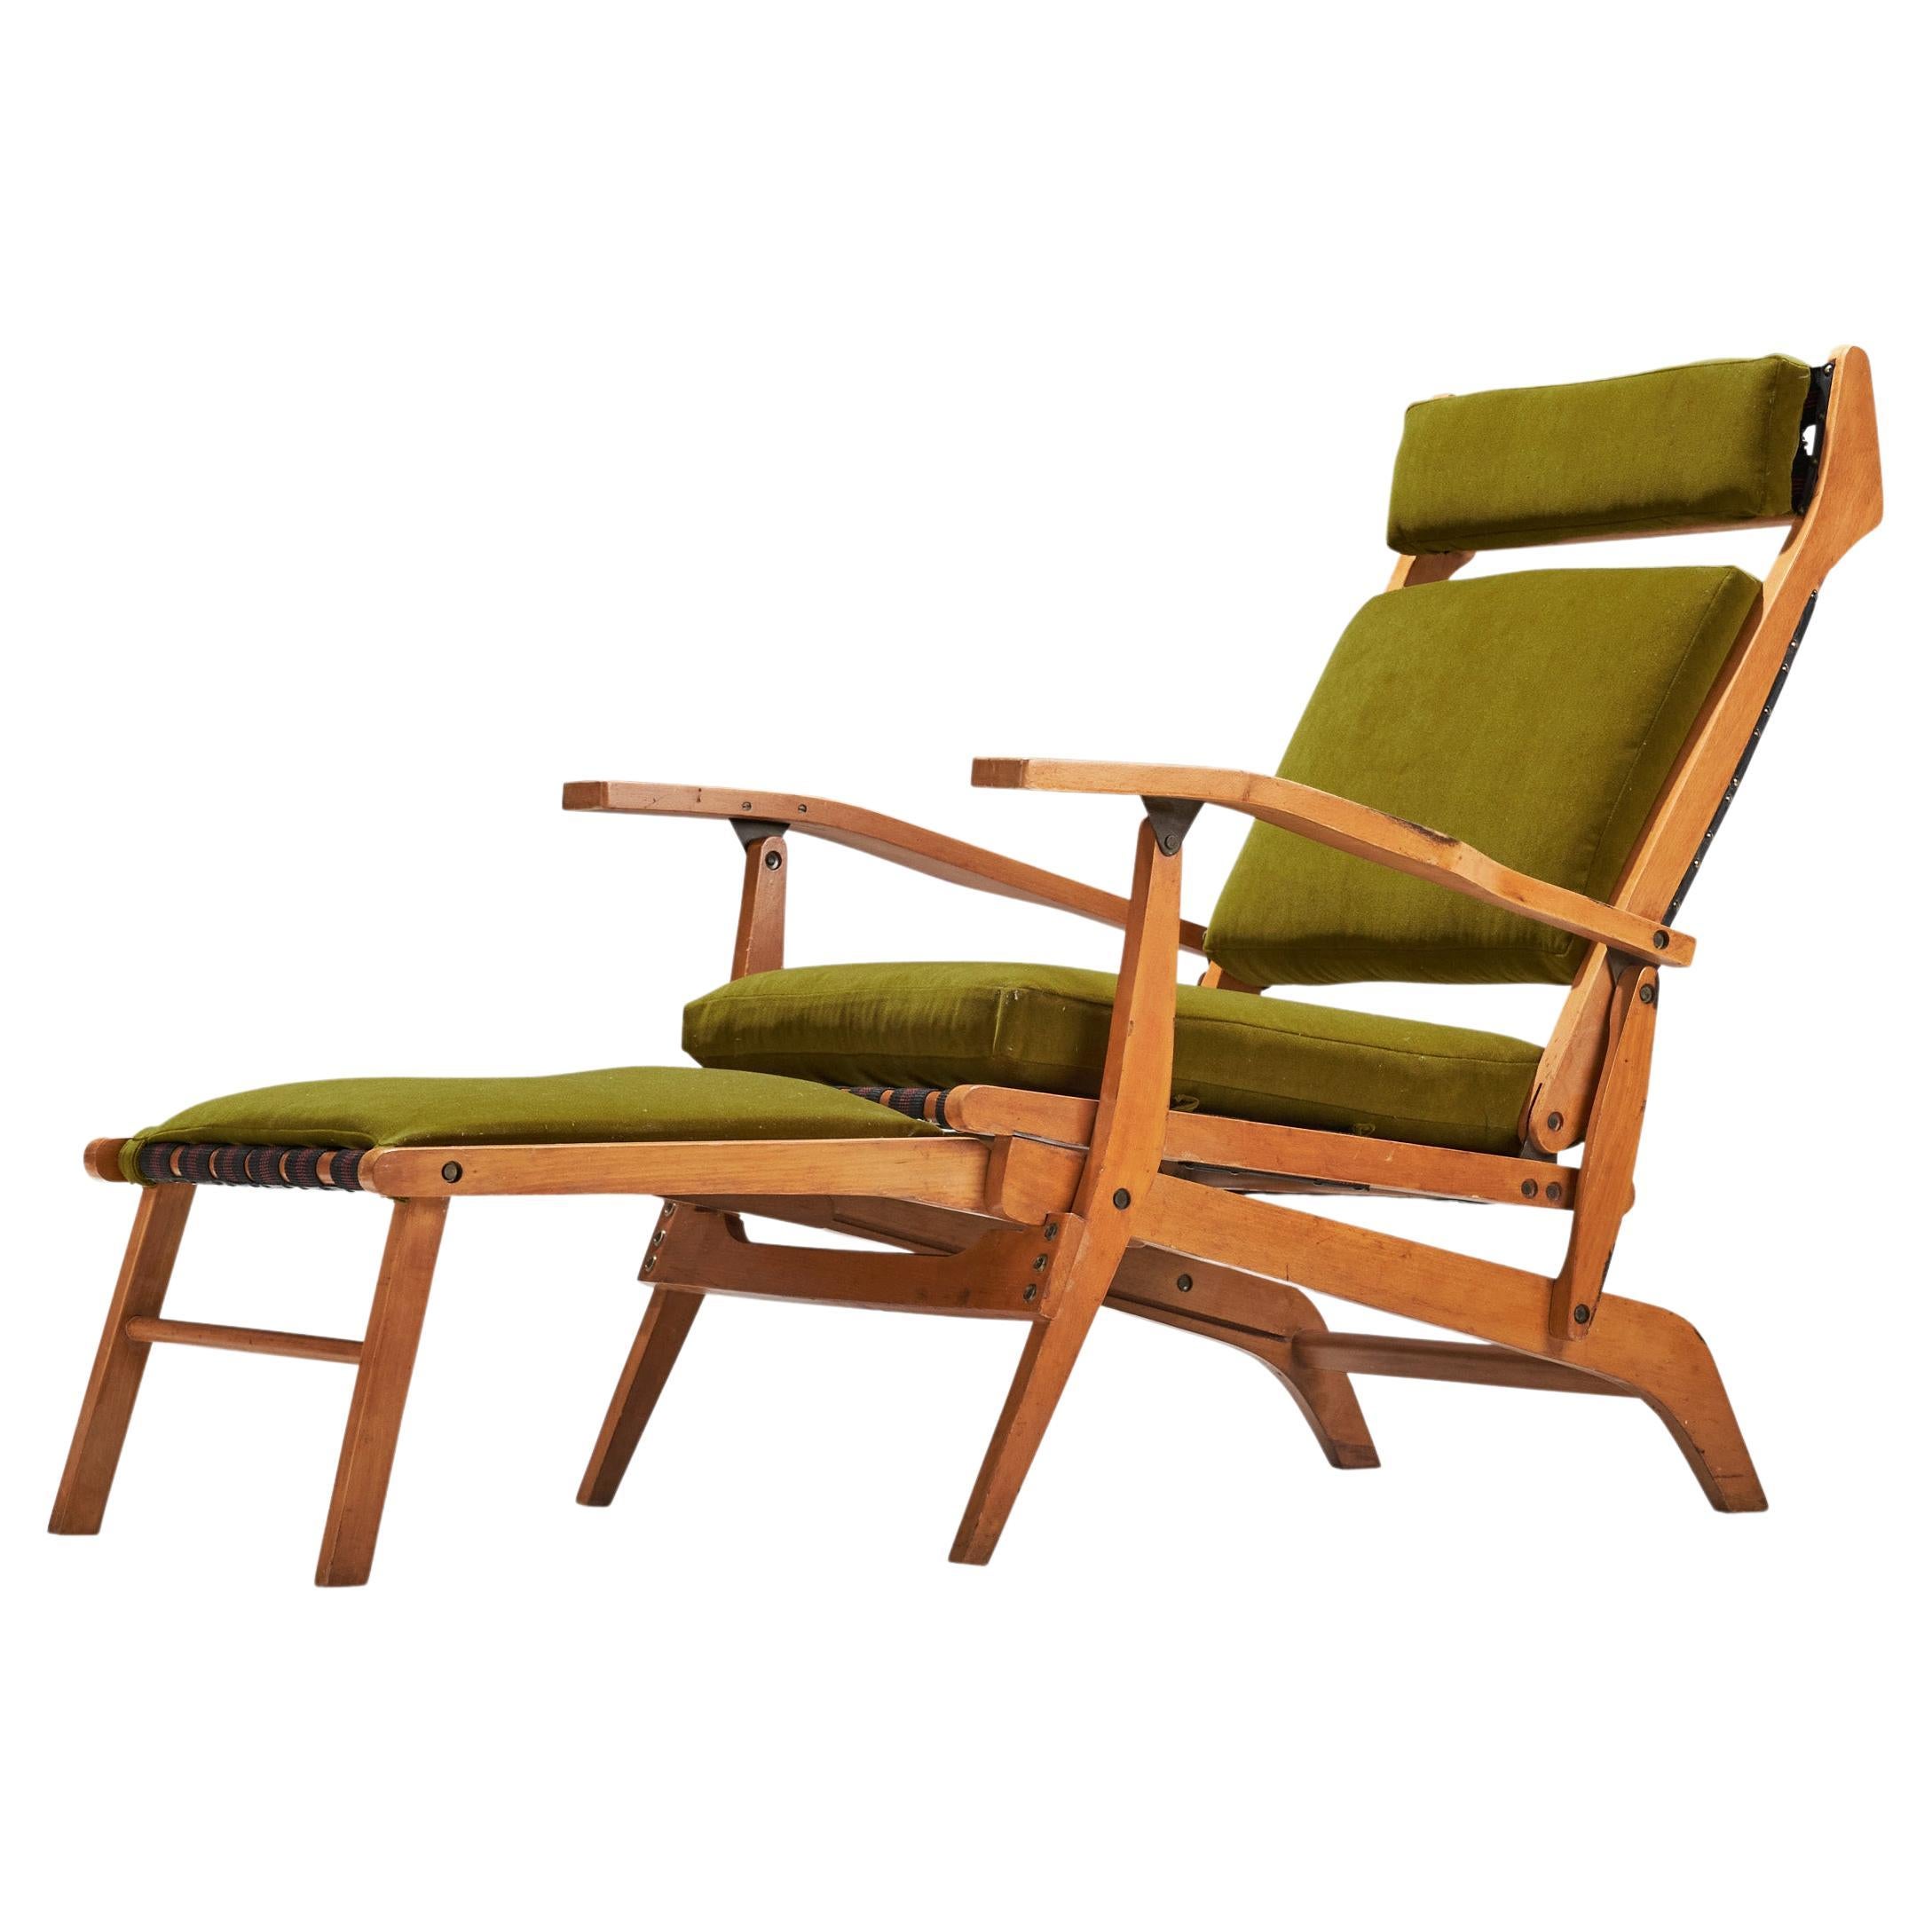 Designer italien, chaise longue verte, hêtre, velours, Italie, années 1950